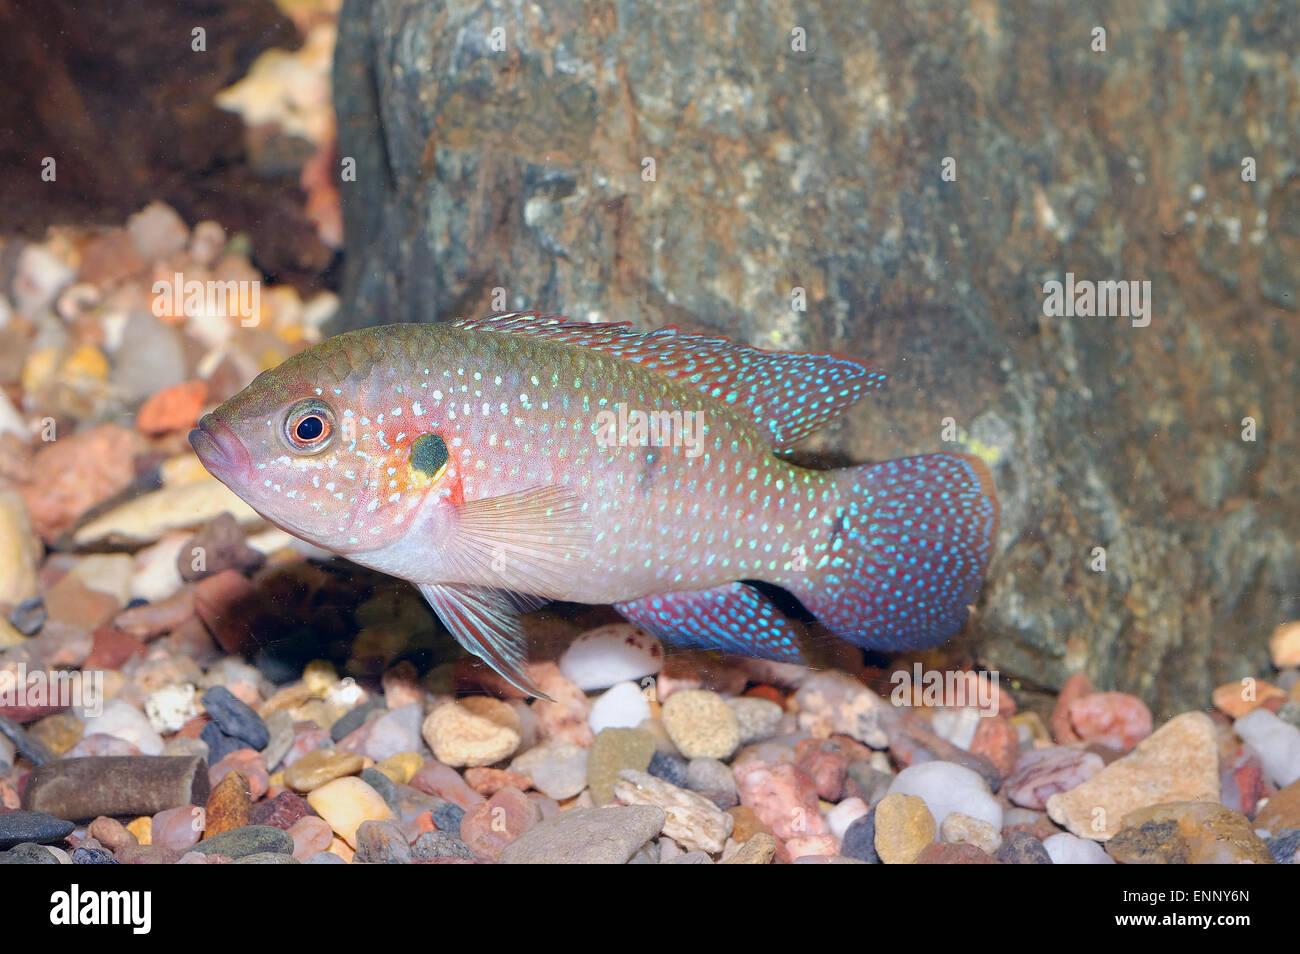 Nice red cichlid fish from genus Hemichromis. Stock Photo